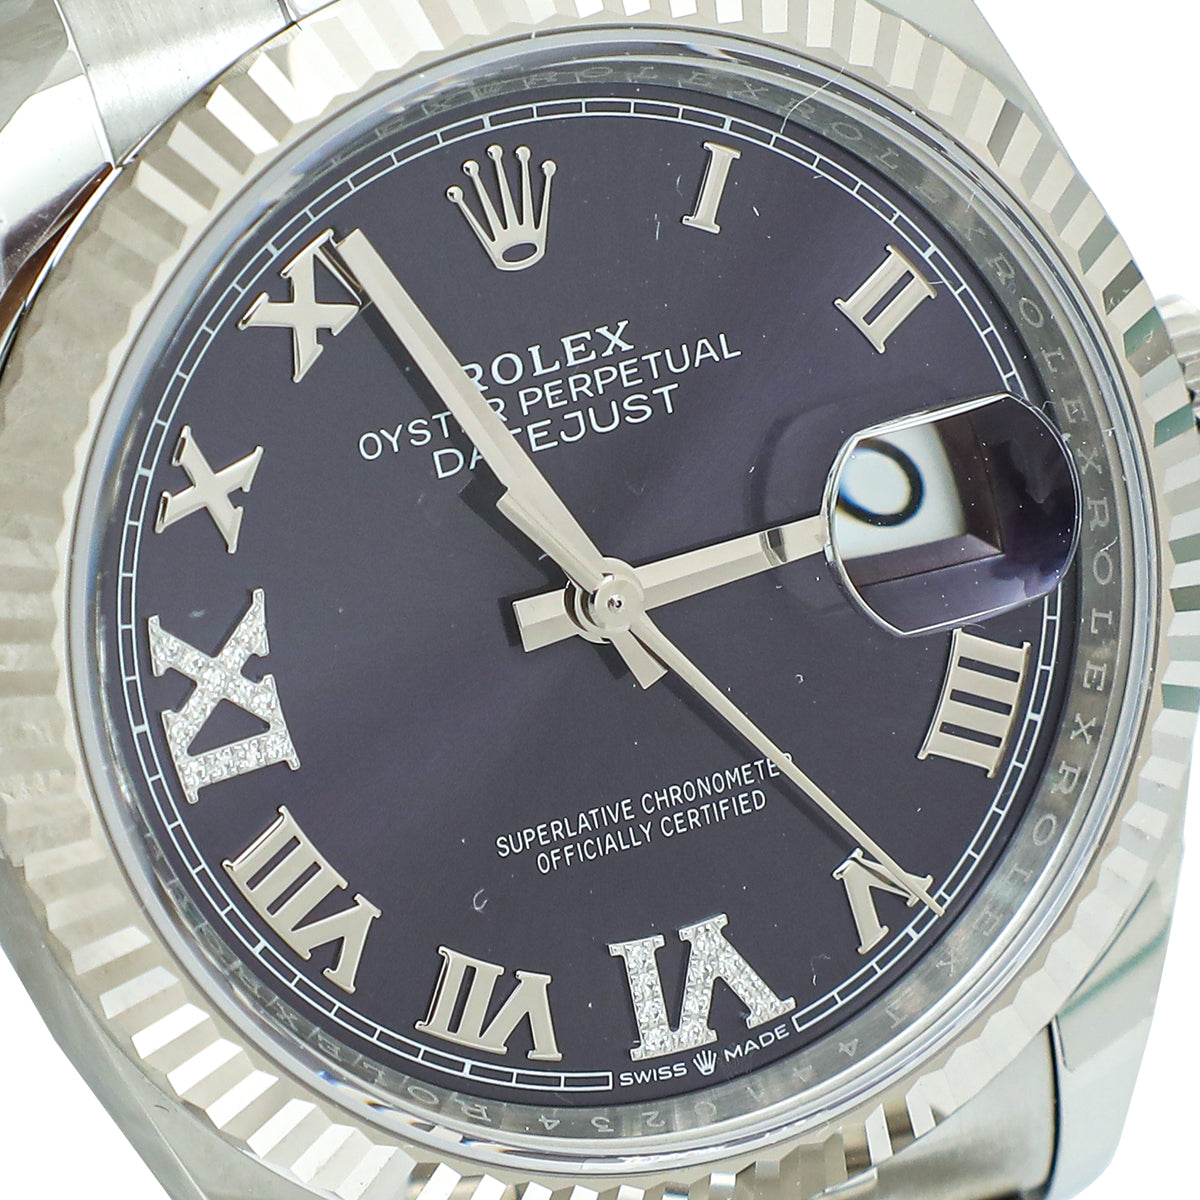 Rolex ST.ST and 18K White Gold Diamond Datejust 36mm Watch